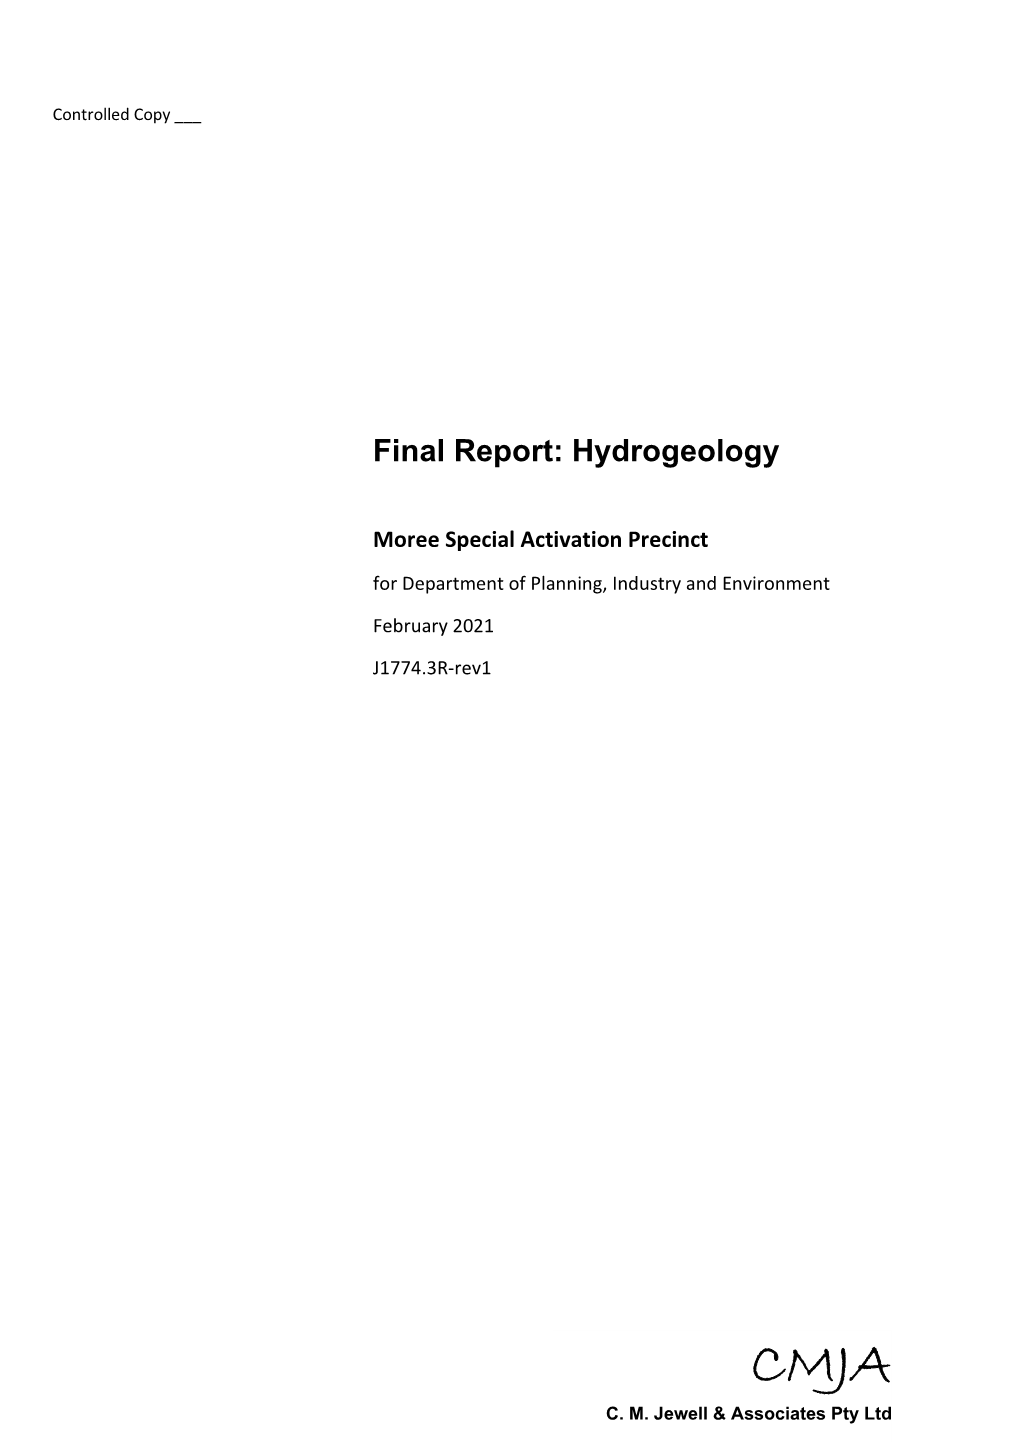 Hydrogeology Report